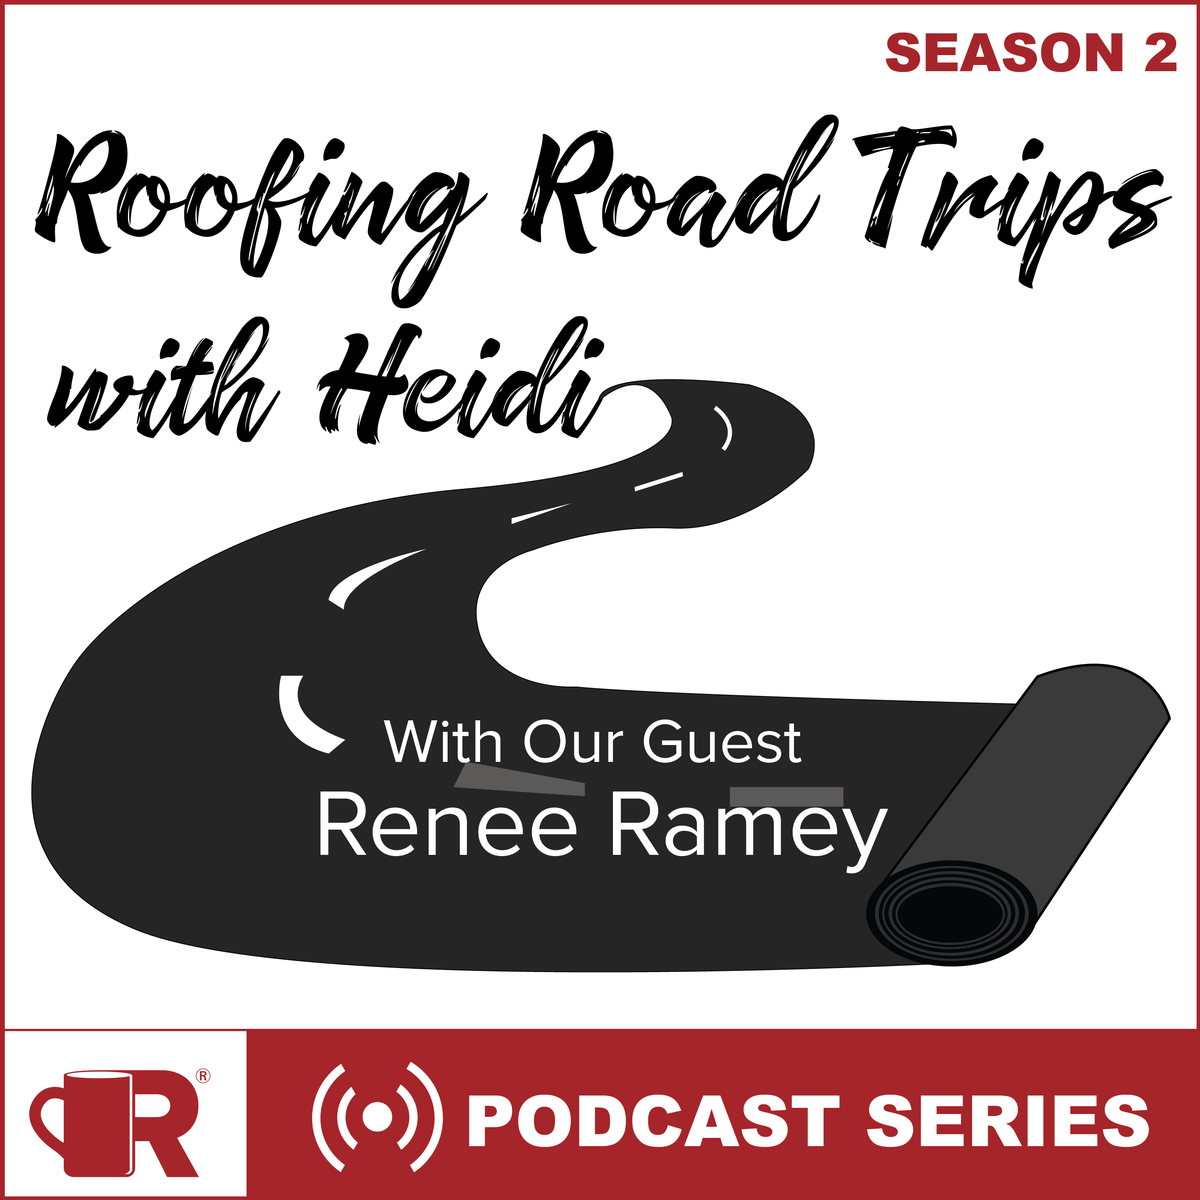 Roofing Roadtrip with Renee Ramey